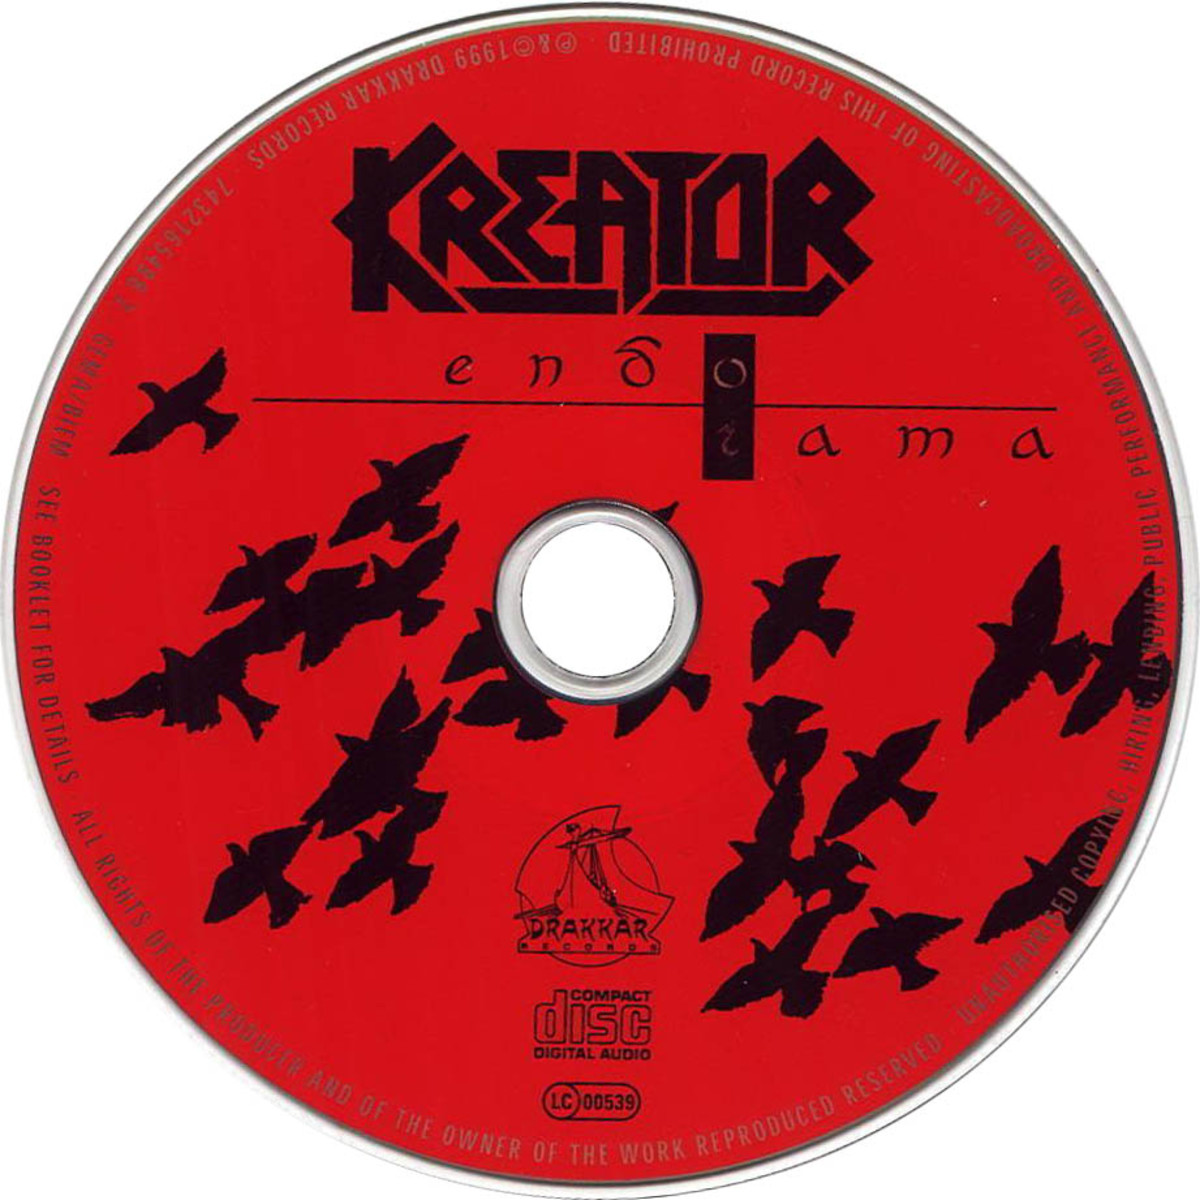 4 Reasons Why the 1999 Studio Album Endorama by German Thrash Metal Band Kreator is Still a Good Album